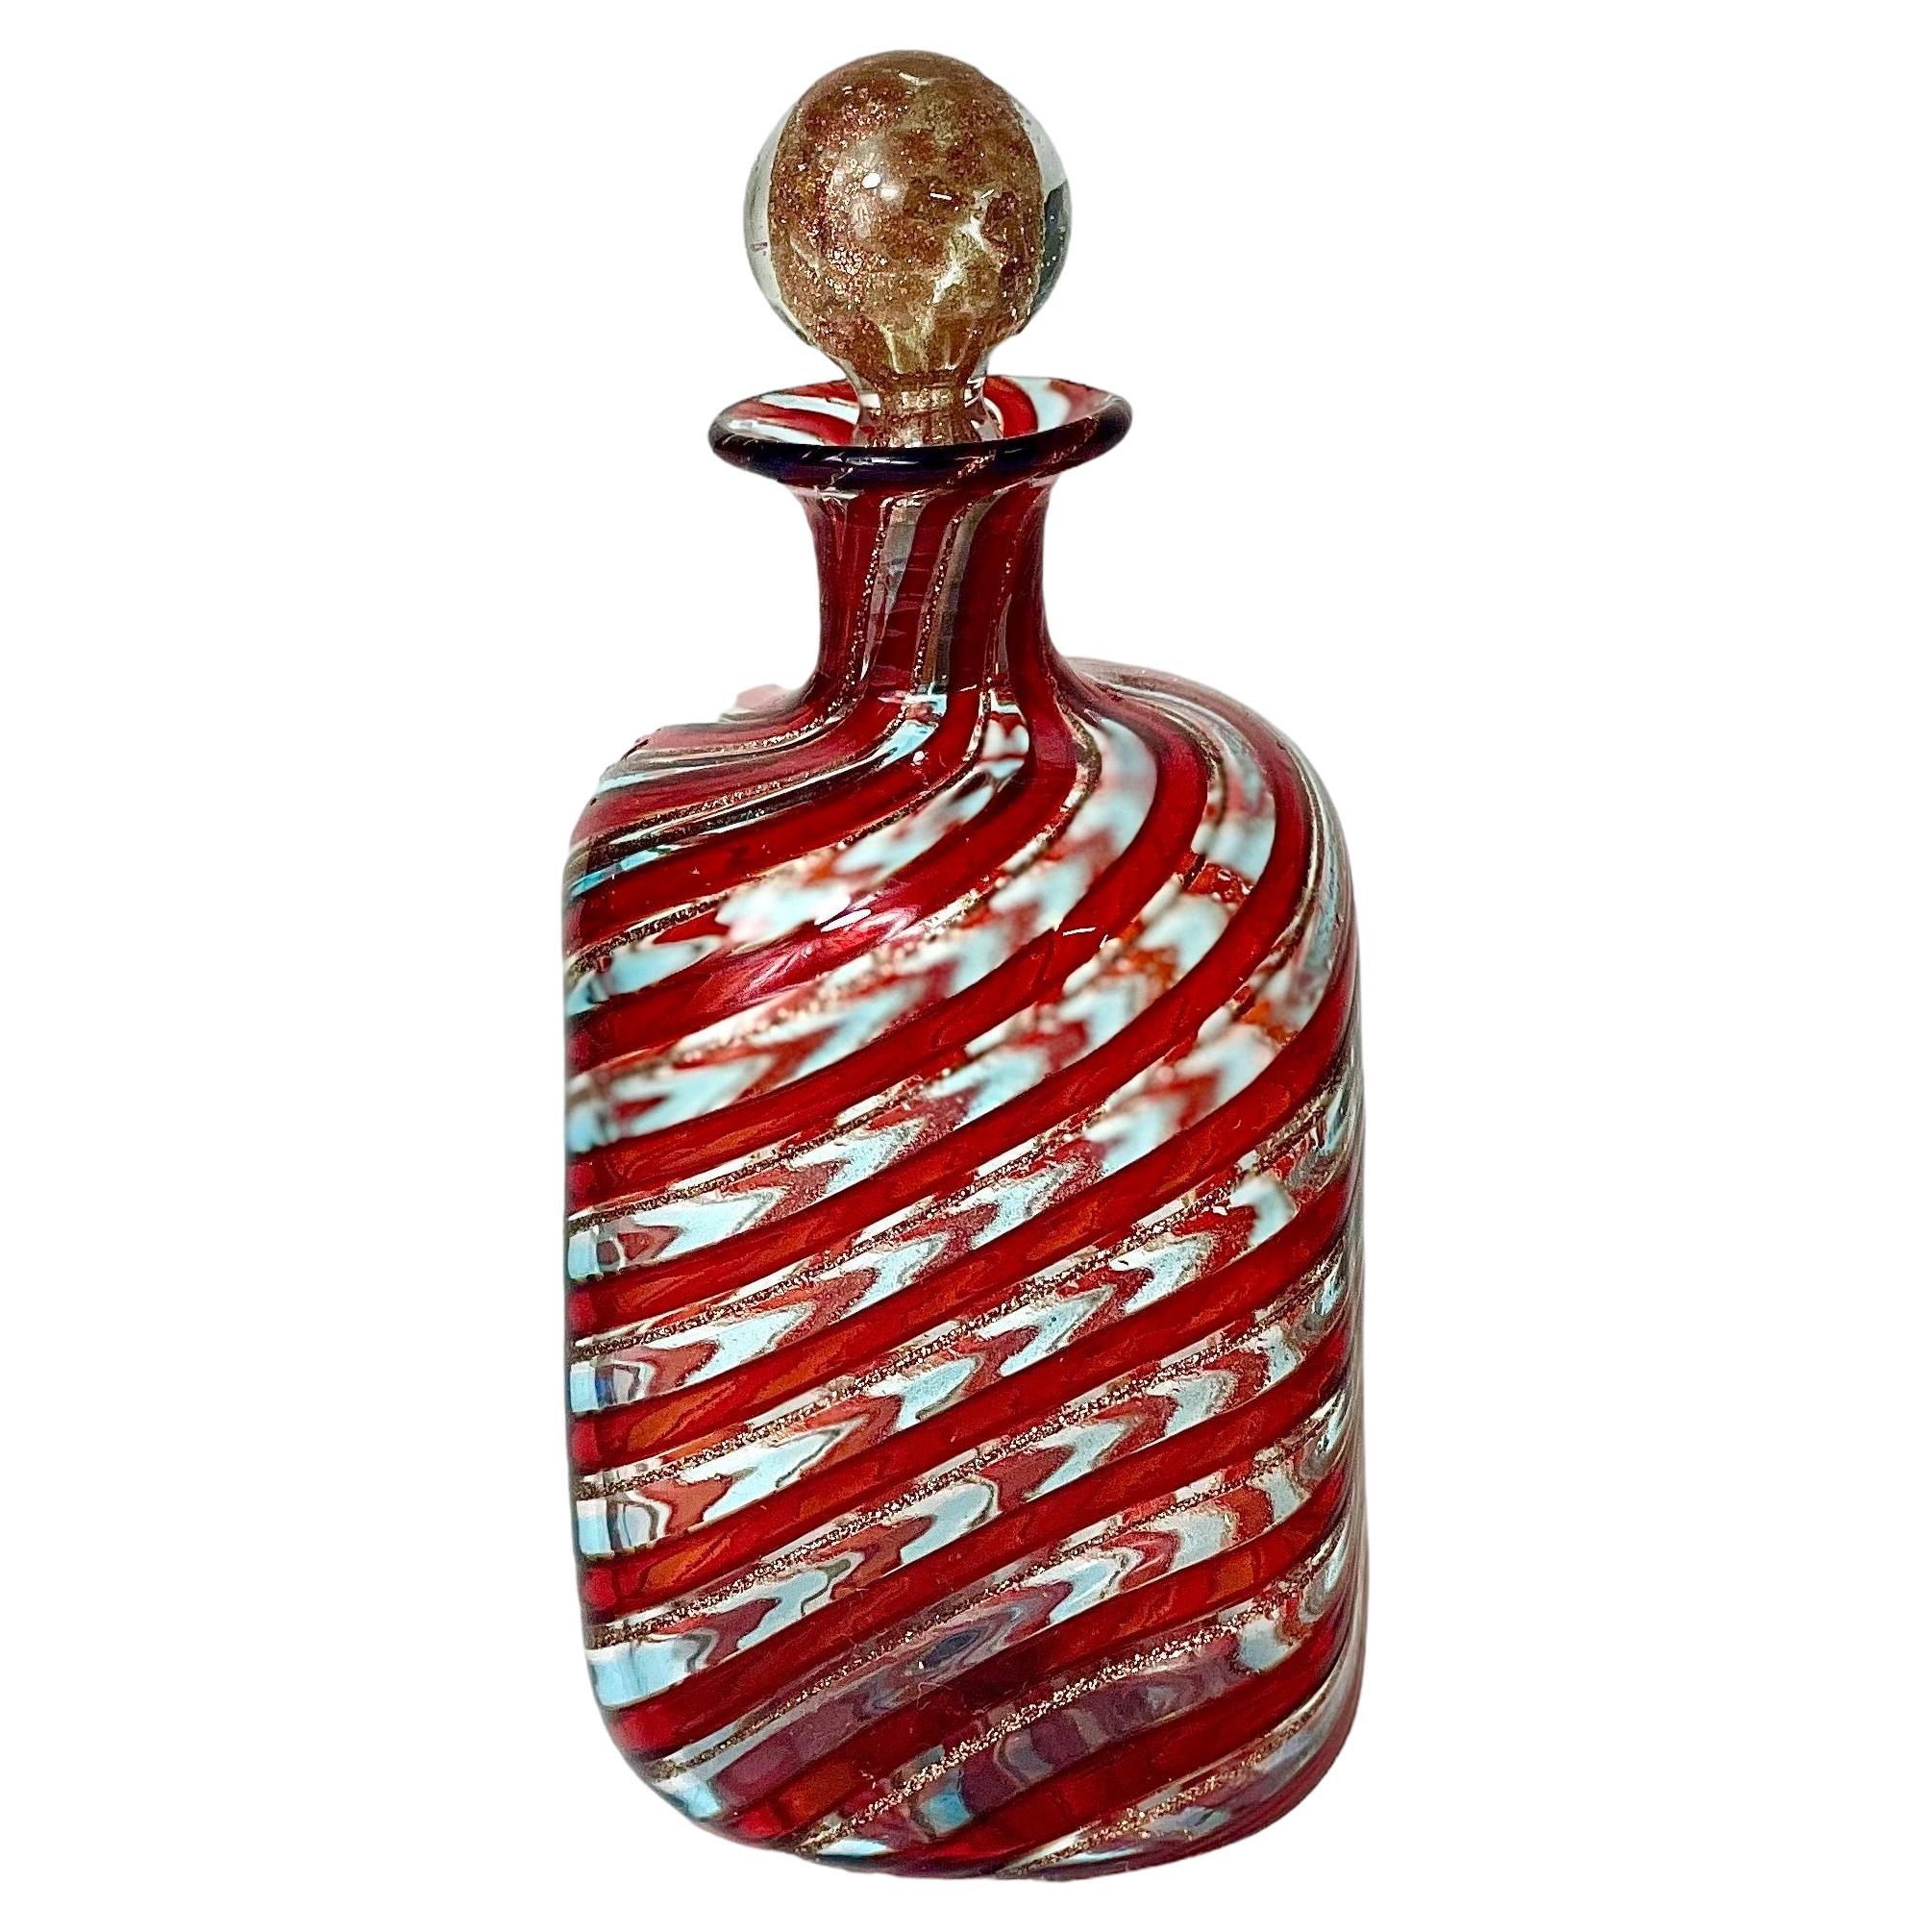 Vieux flacon de parfum en verre de Murano avec bouchon